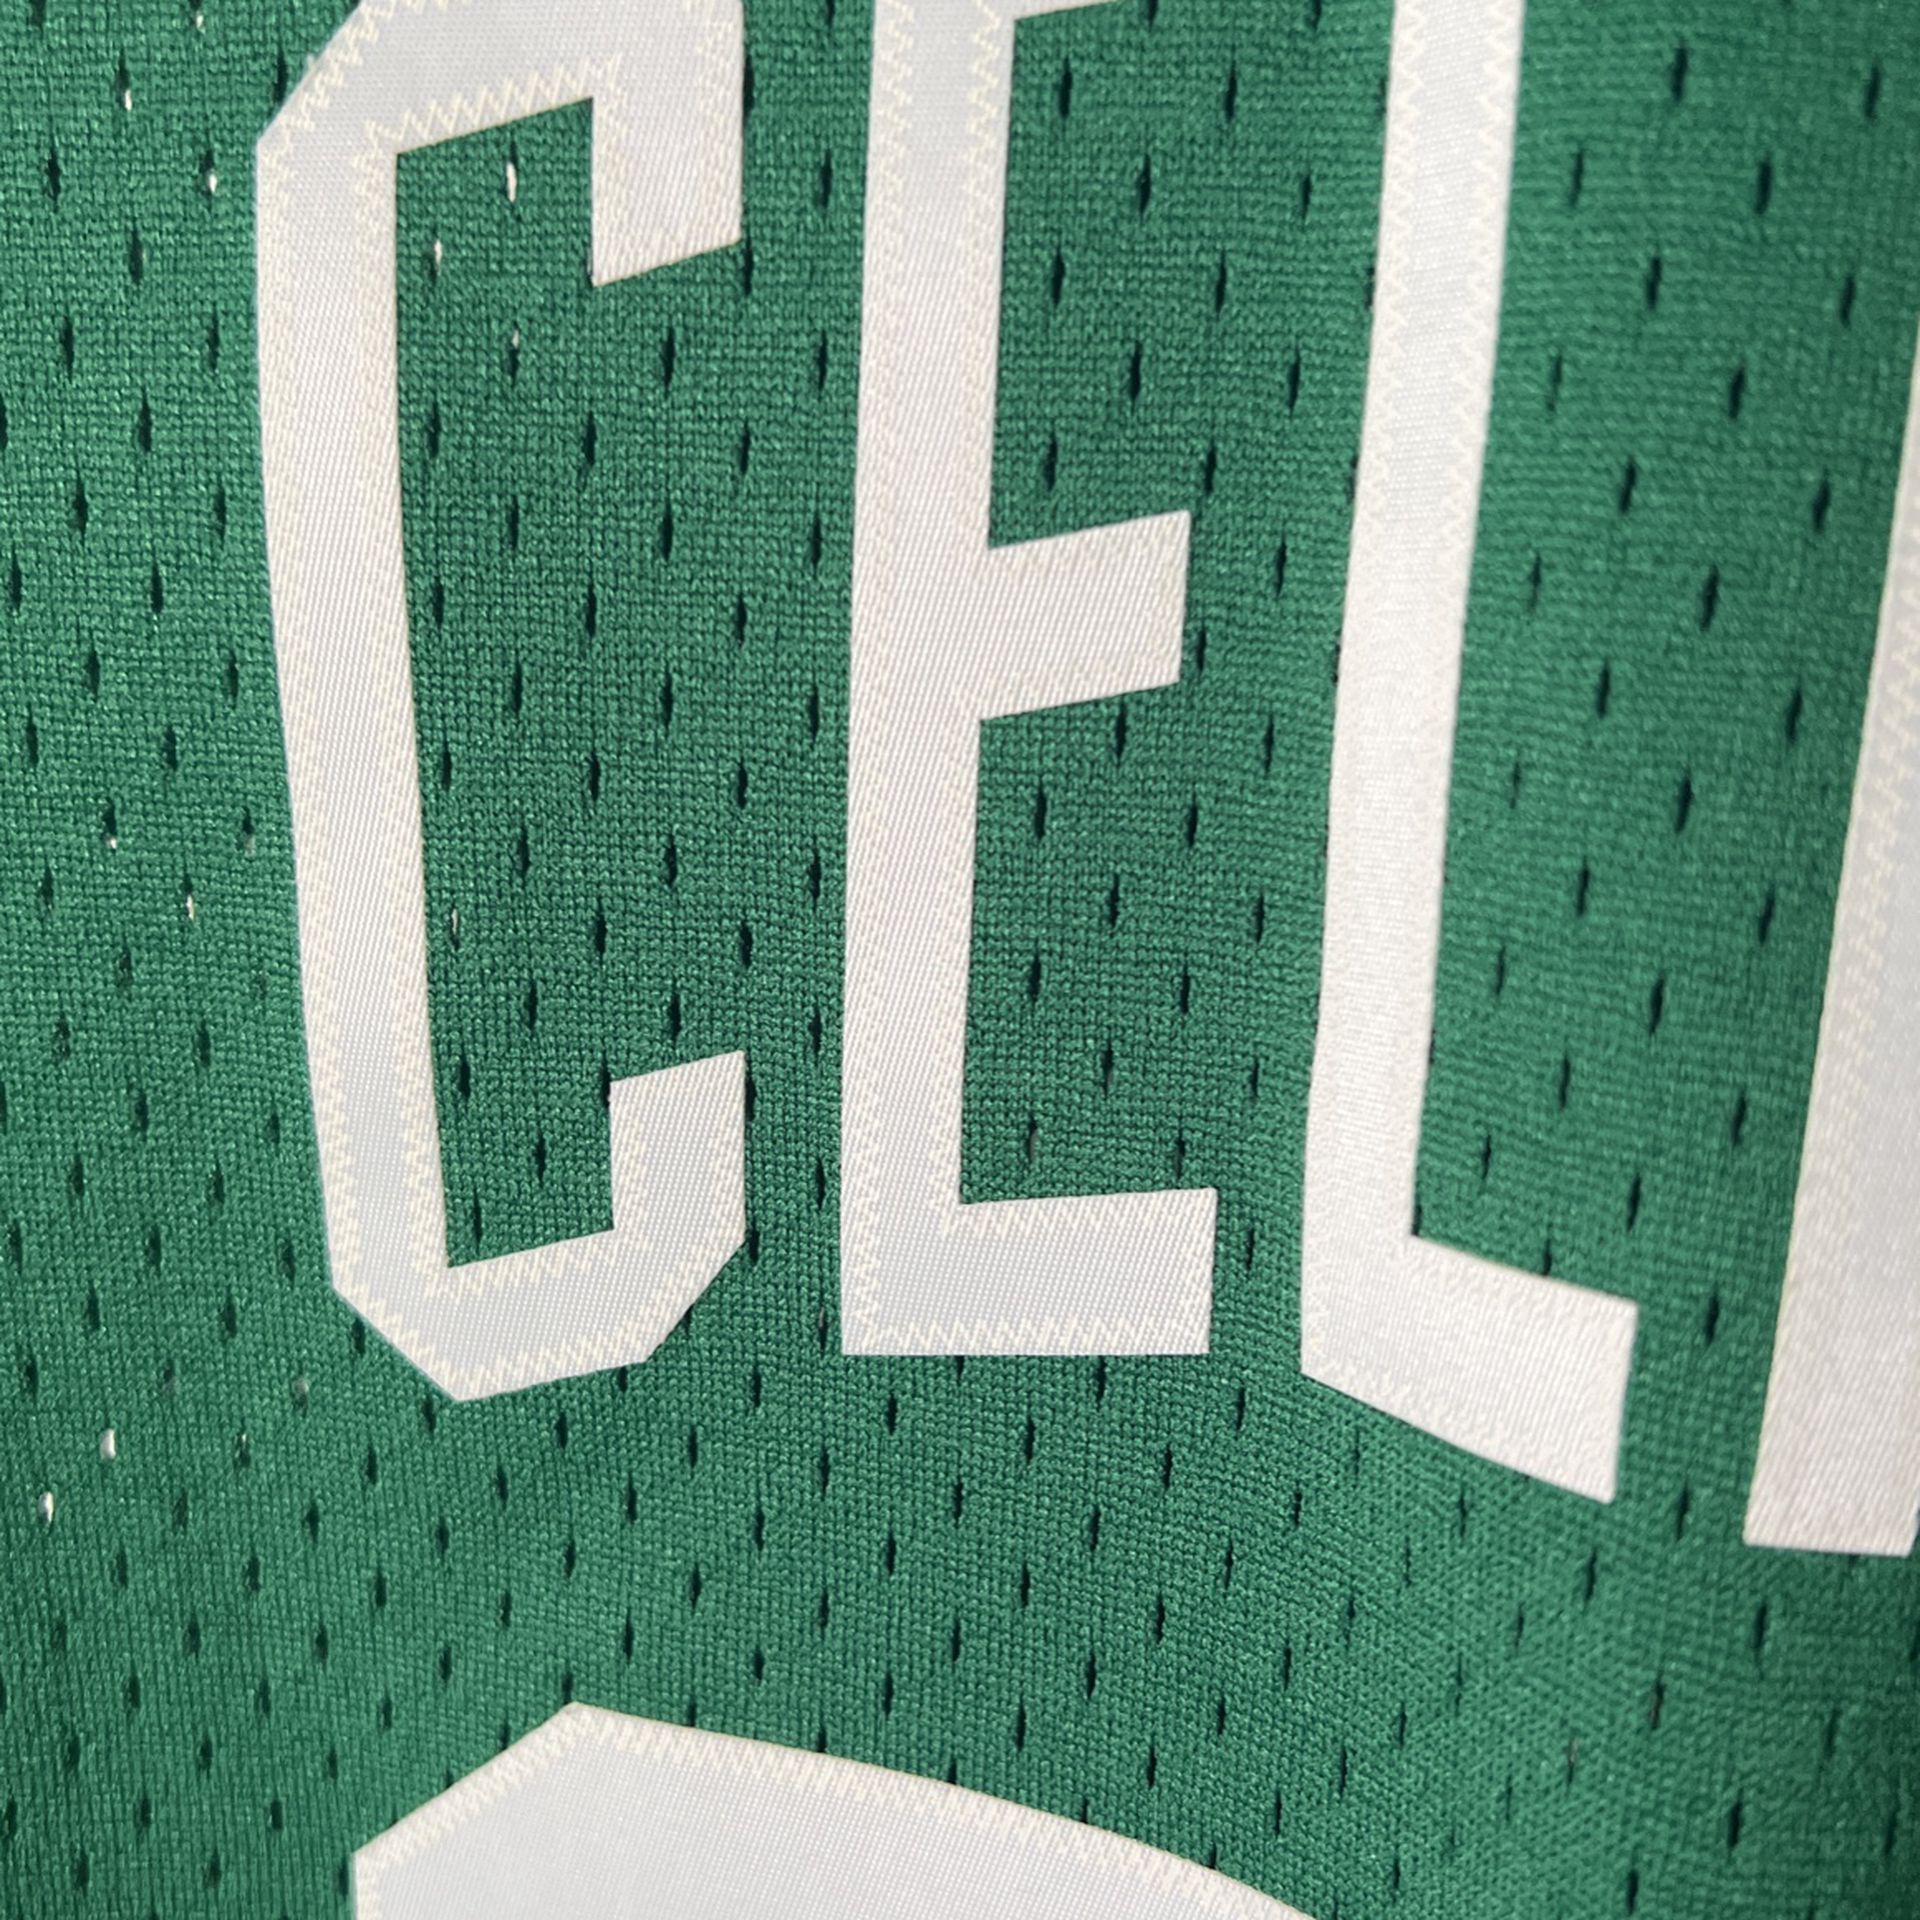 NBA Boston Celtics Jersey. Larry Bird for Sale in San Jose, CA - OfferUp